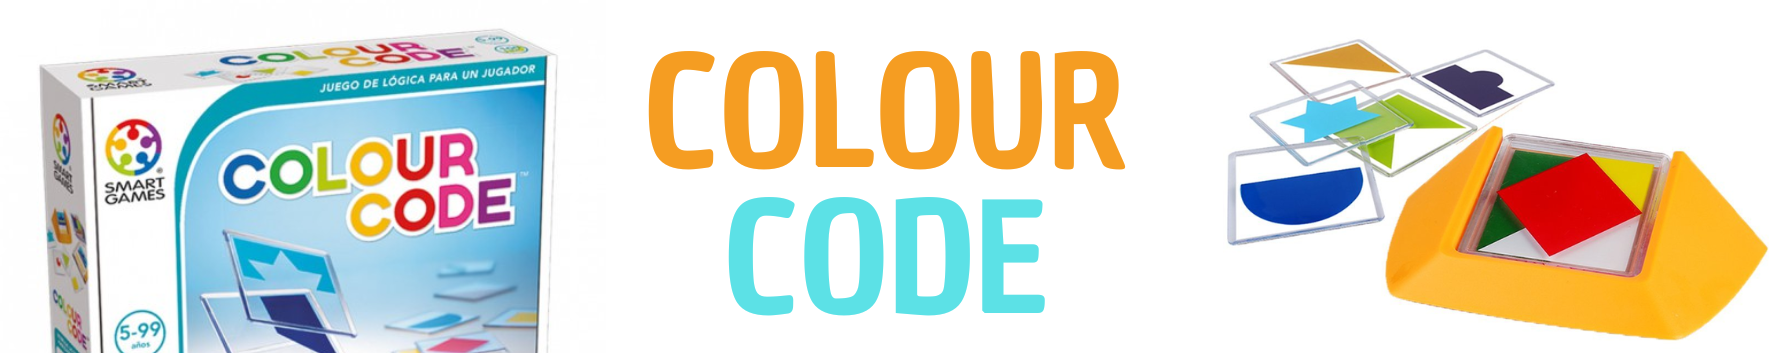 Colour code de Smart games